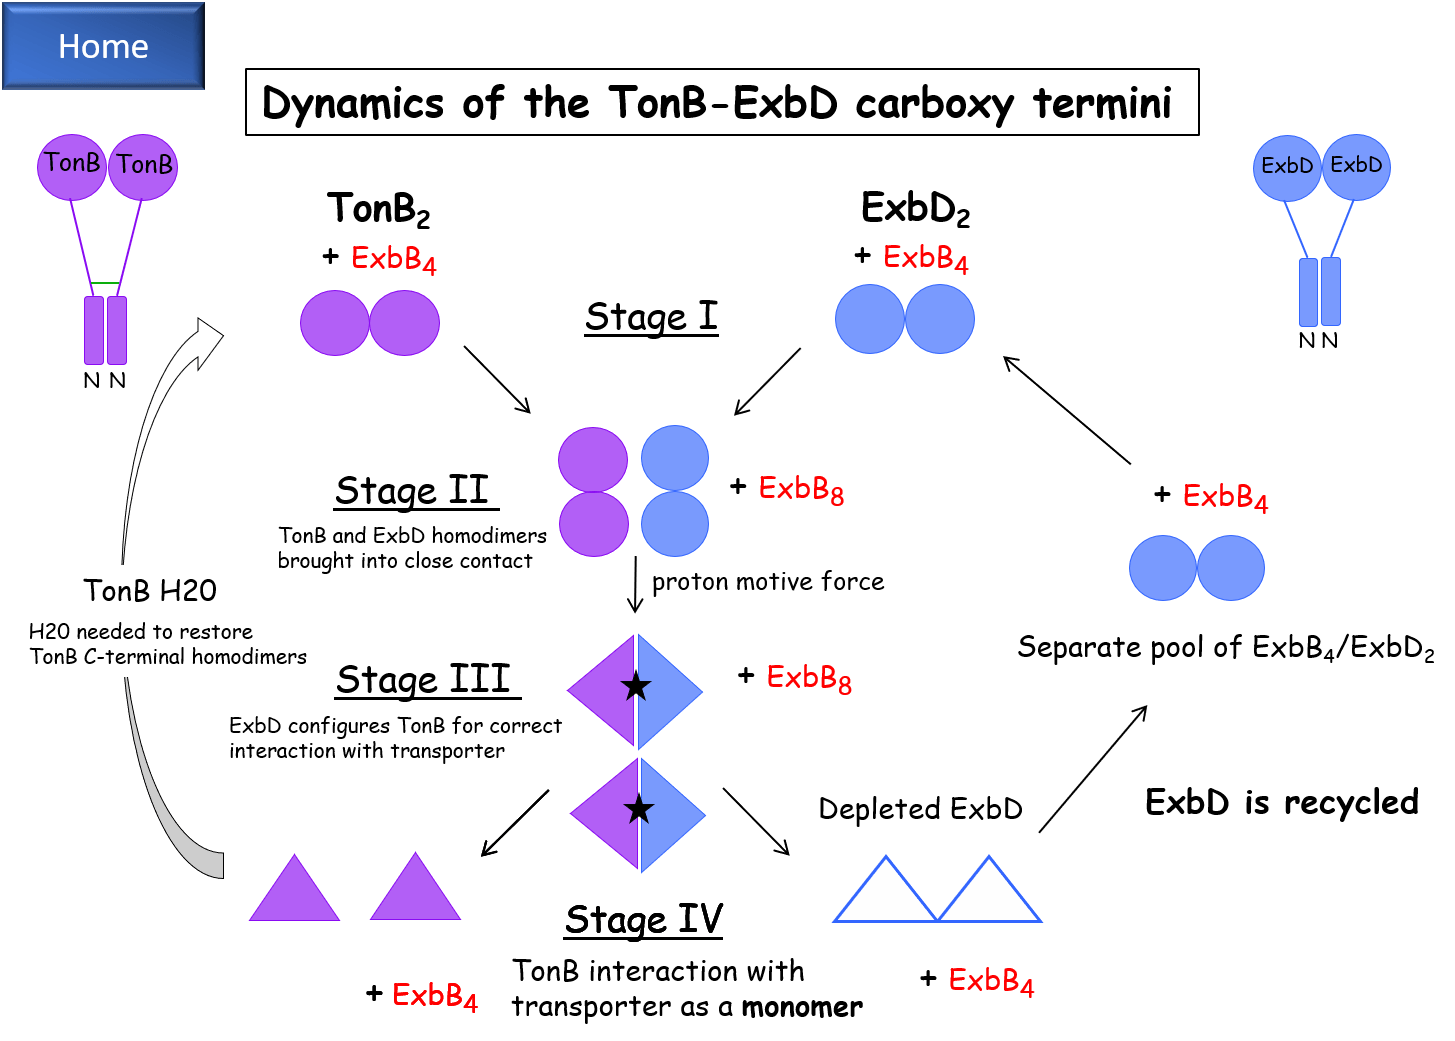 Dynamics of the TonB-ExbD Carboxy Termini